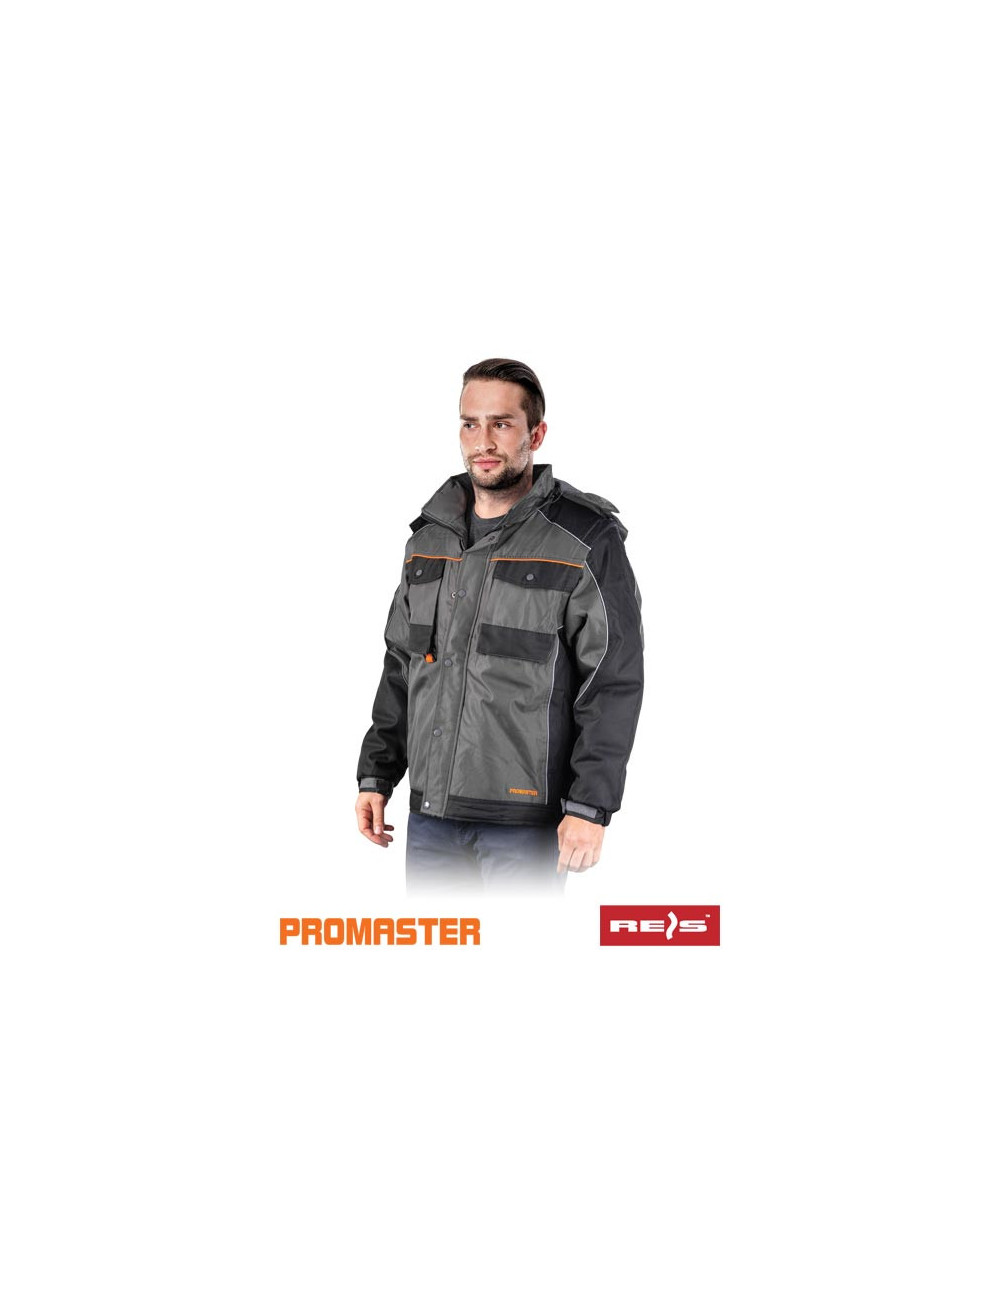 Pro-fedder sbp protective padded jacket steel-black-orange Reis